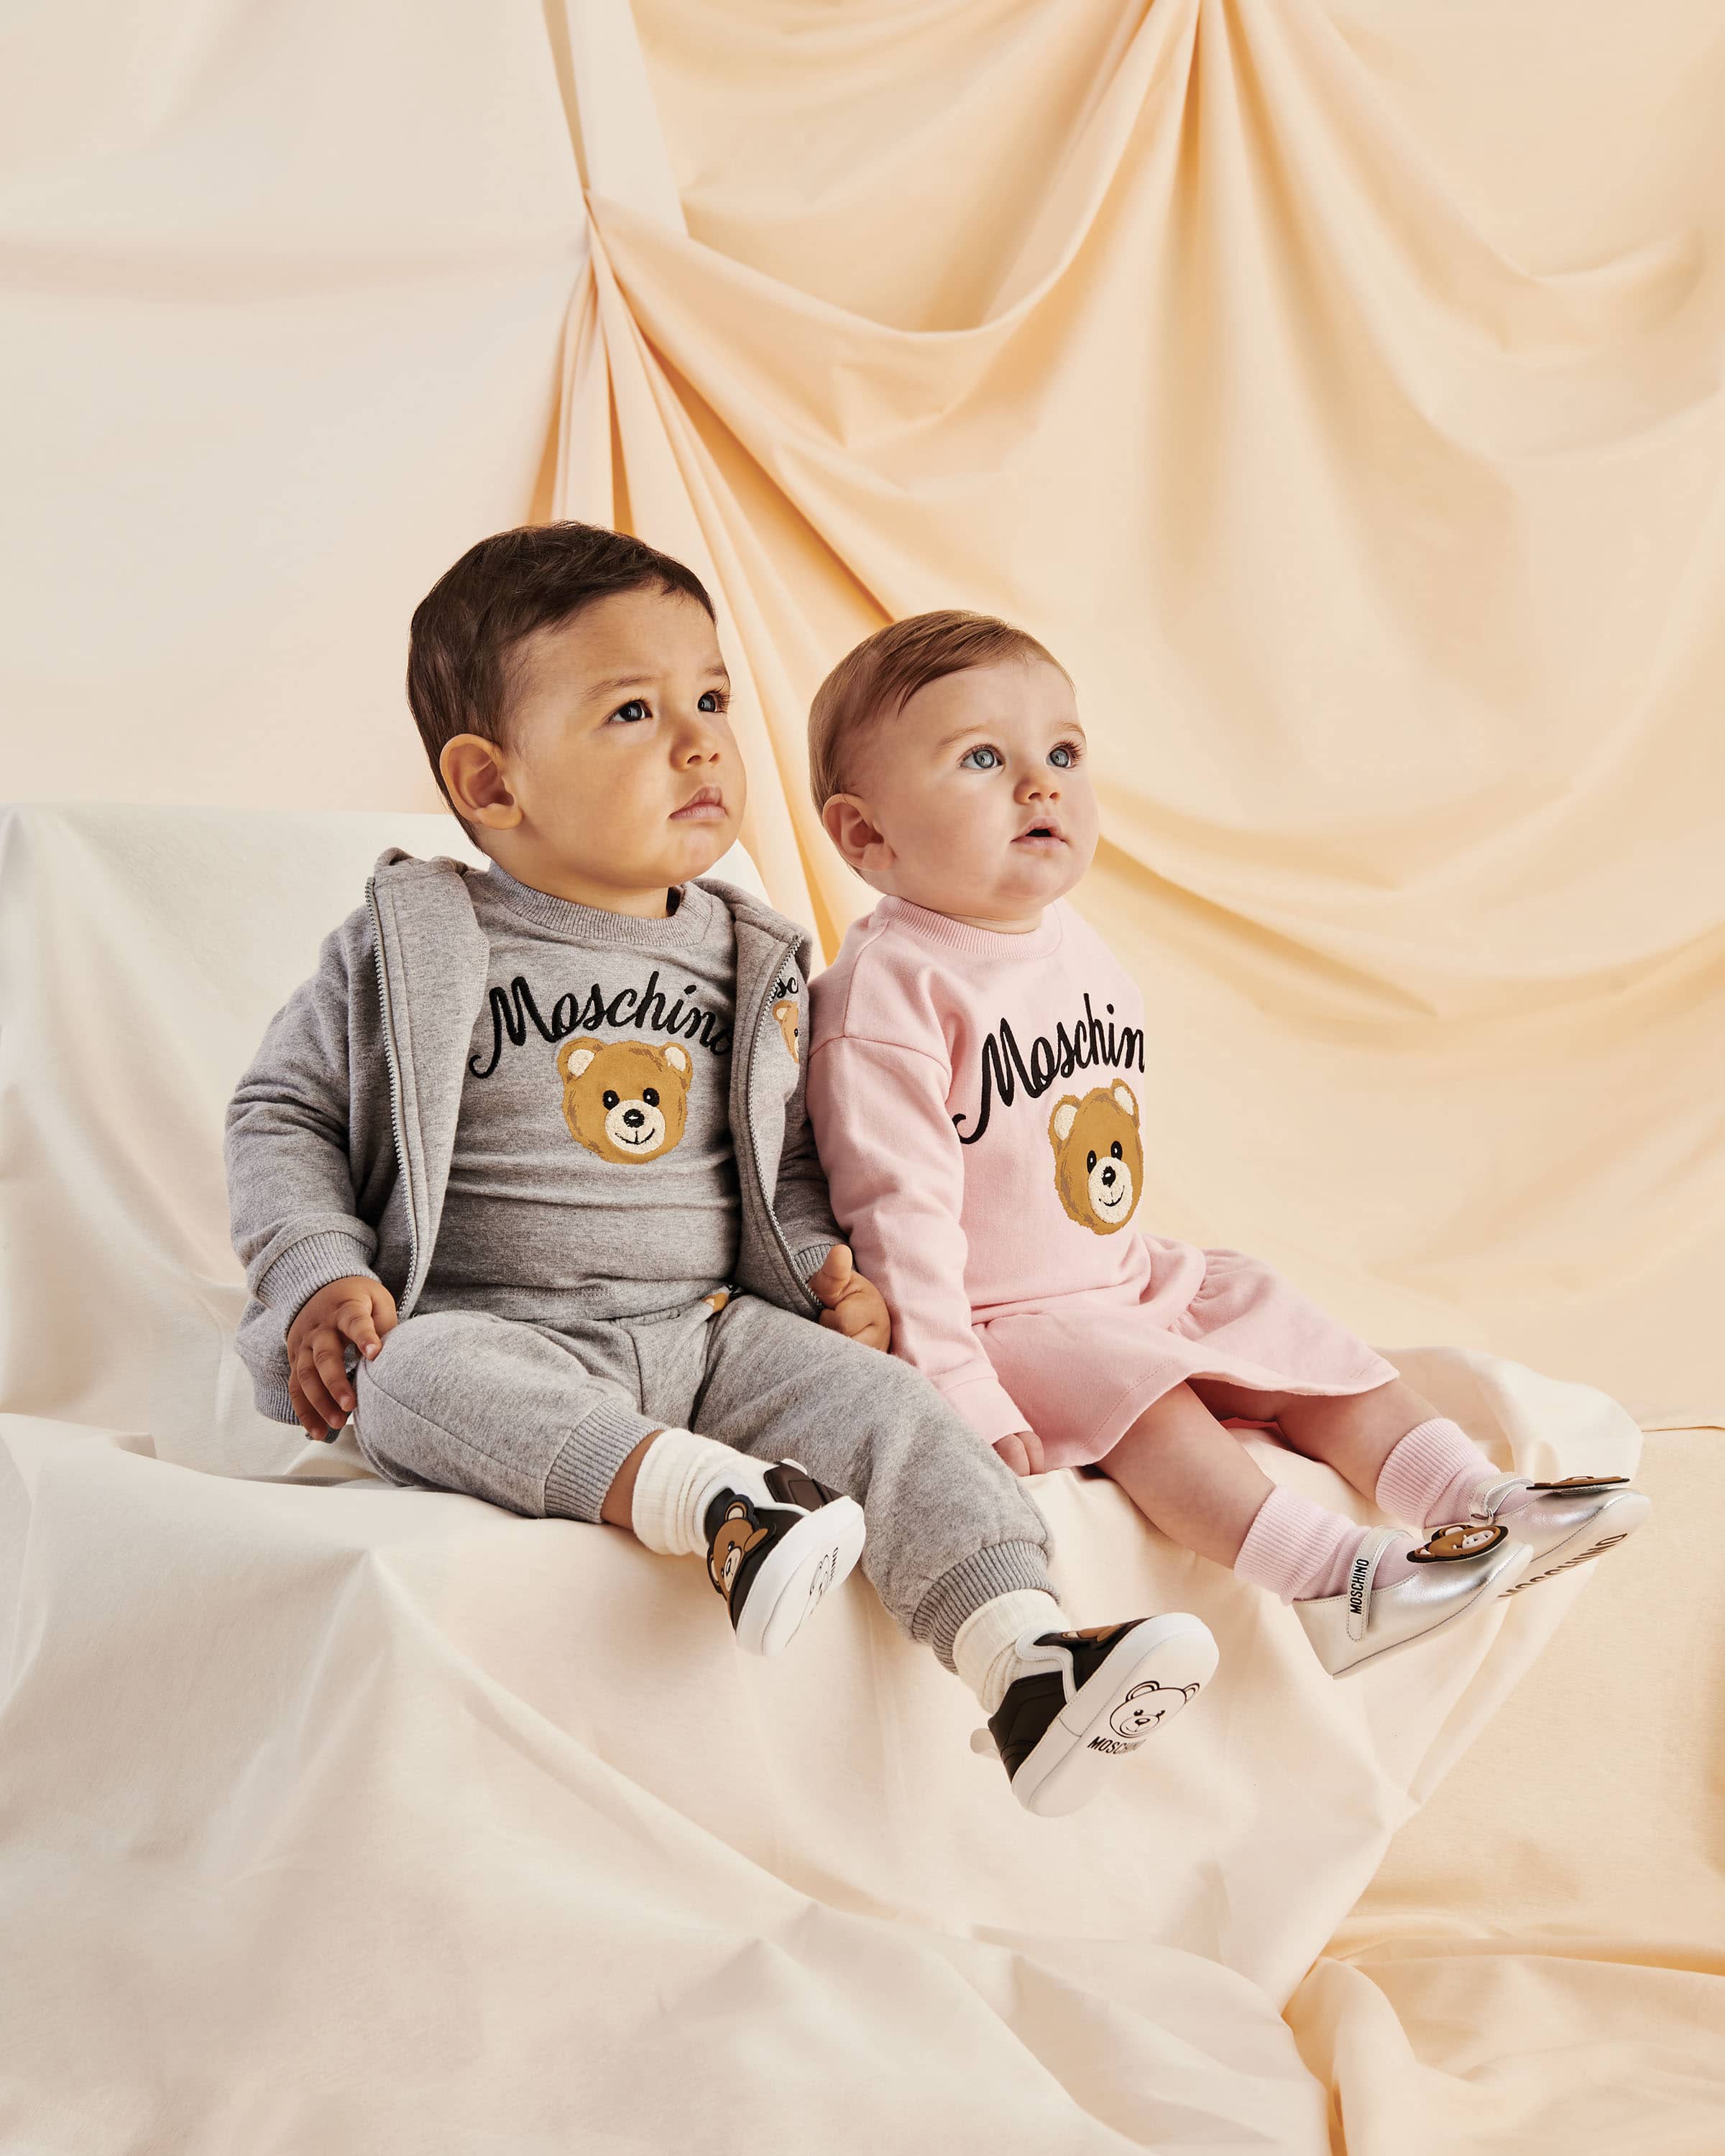 Blanket MOSCHINO BABY Kids color Yellow Cream